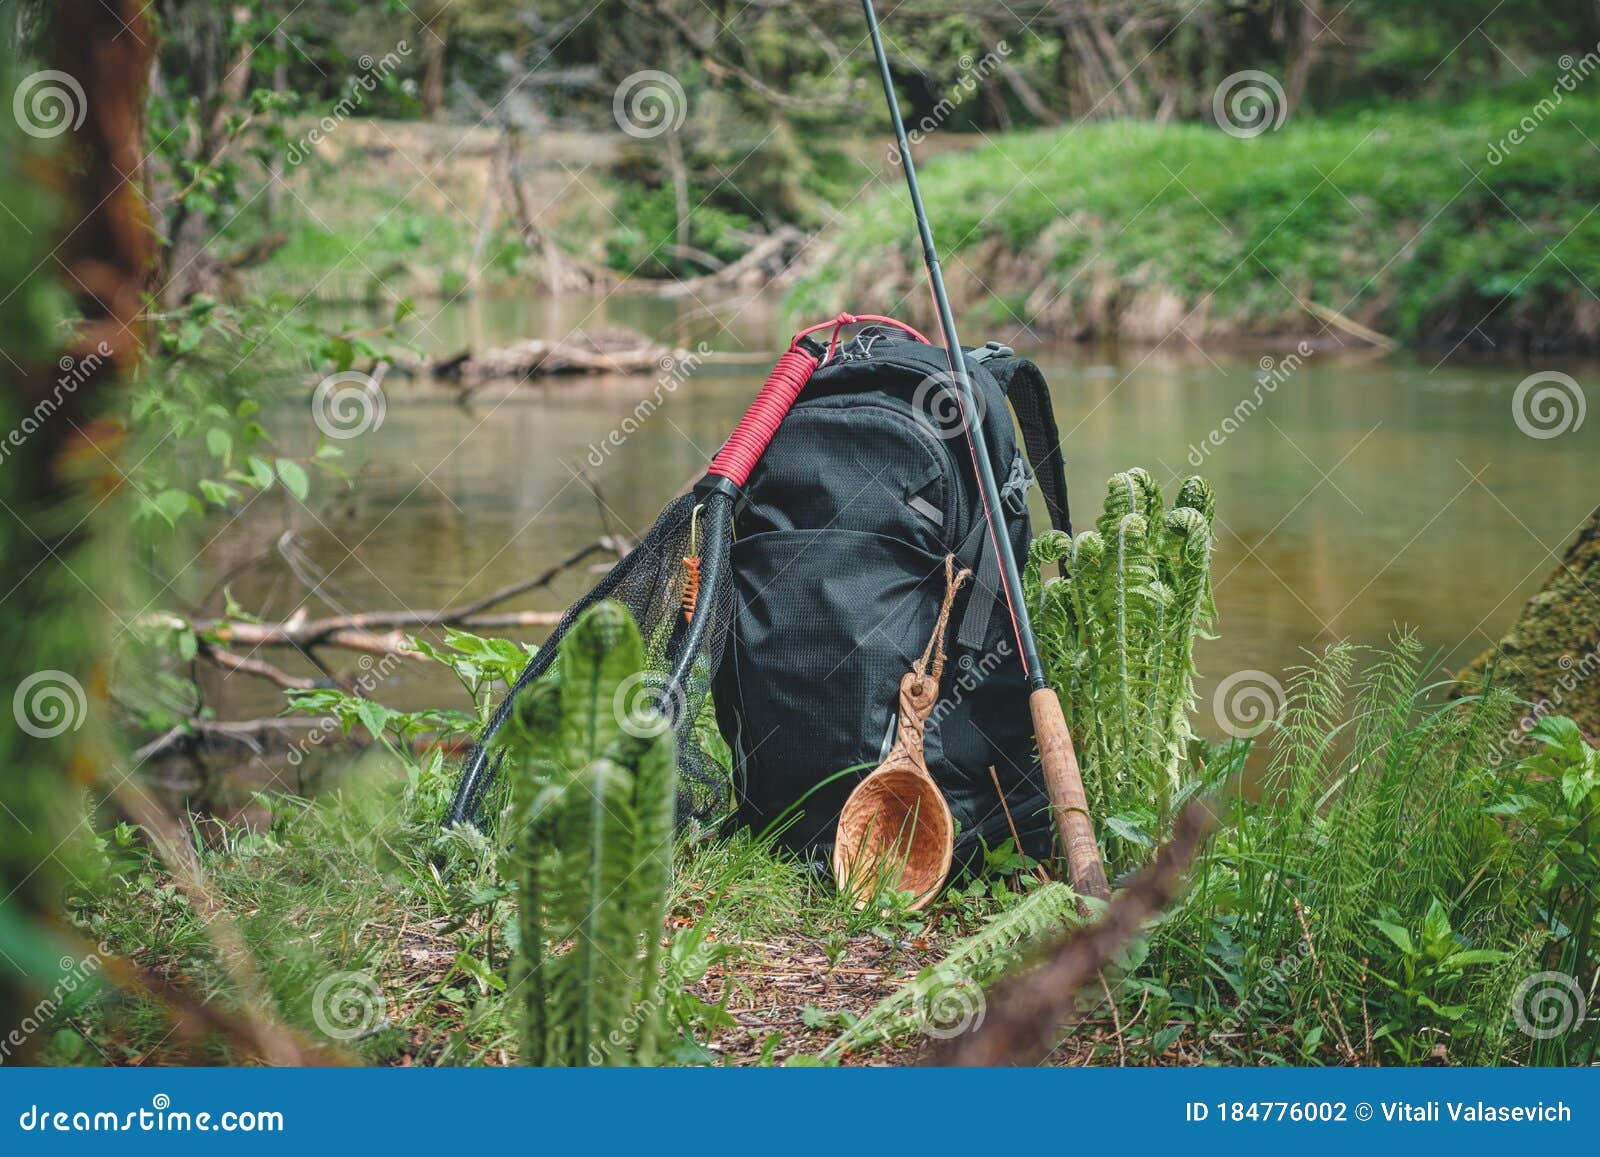 https://thumbs.dreamstime.com/z/backpack-fishing-rod-river-gear-184776002.jpg